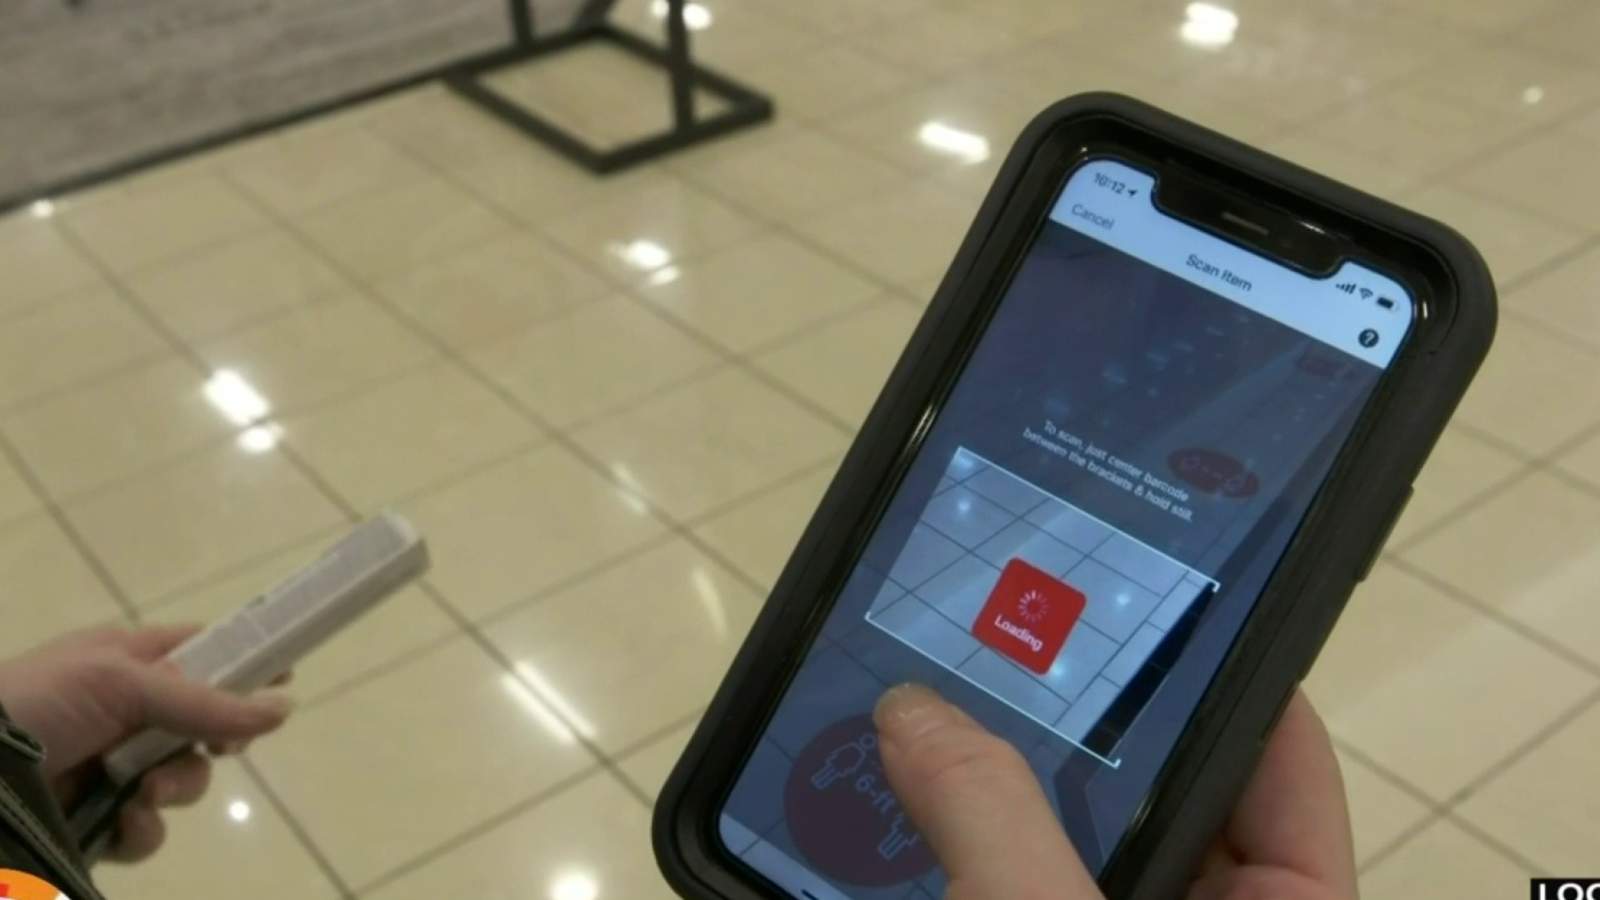 Shop til you drop with the new Macys mobile app